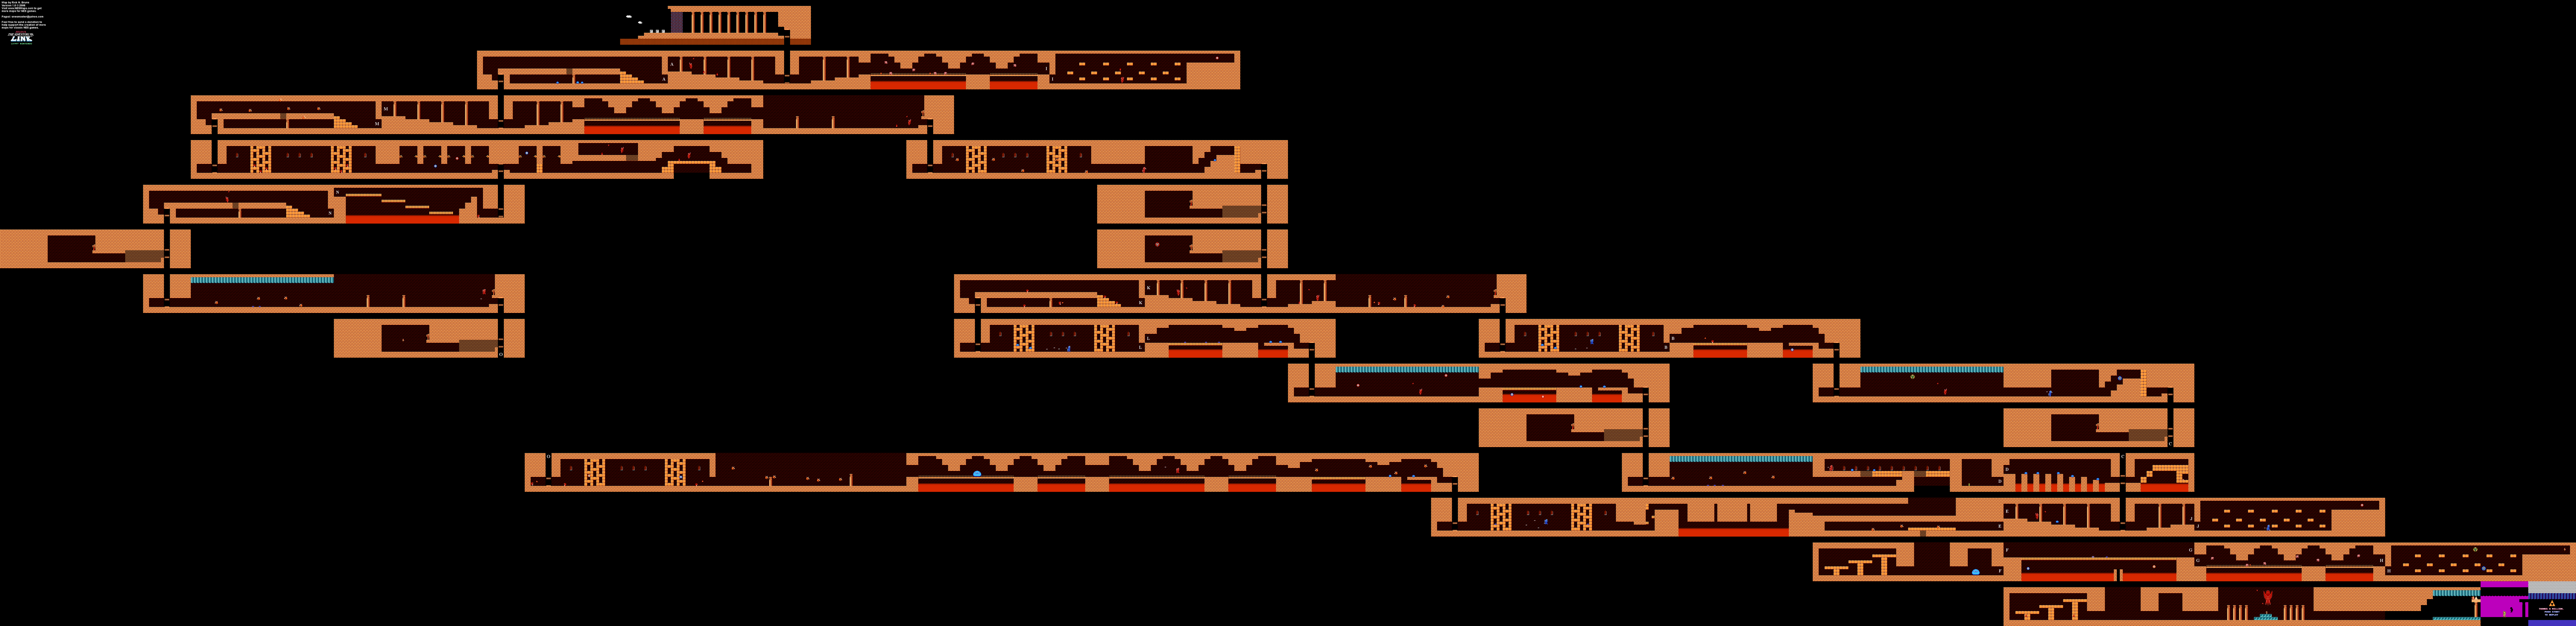 Zelda II The Adventure of Link - Great Palace (Level 7) [39] - NES Map